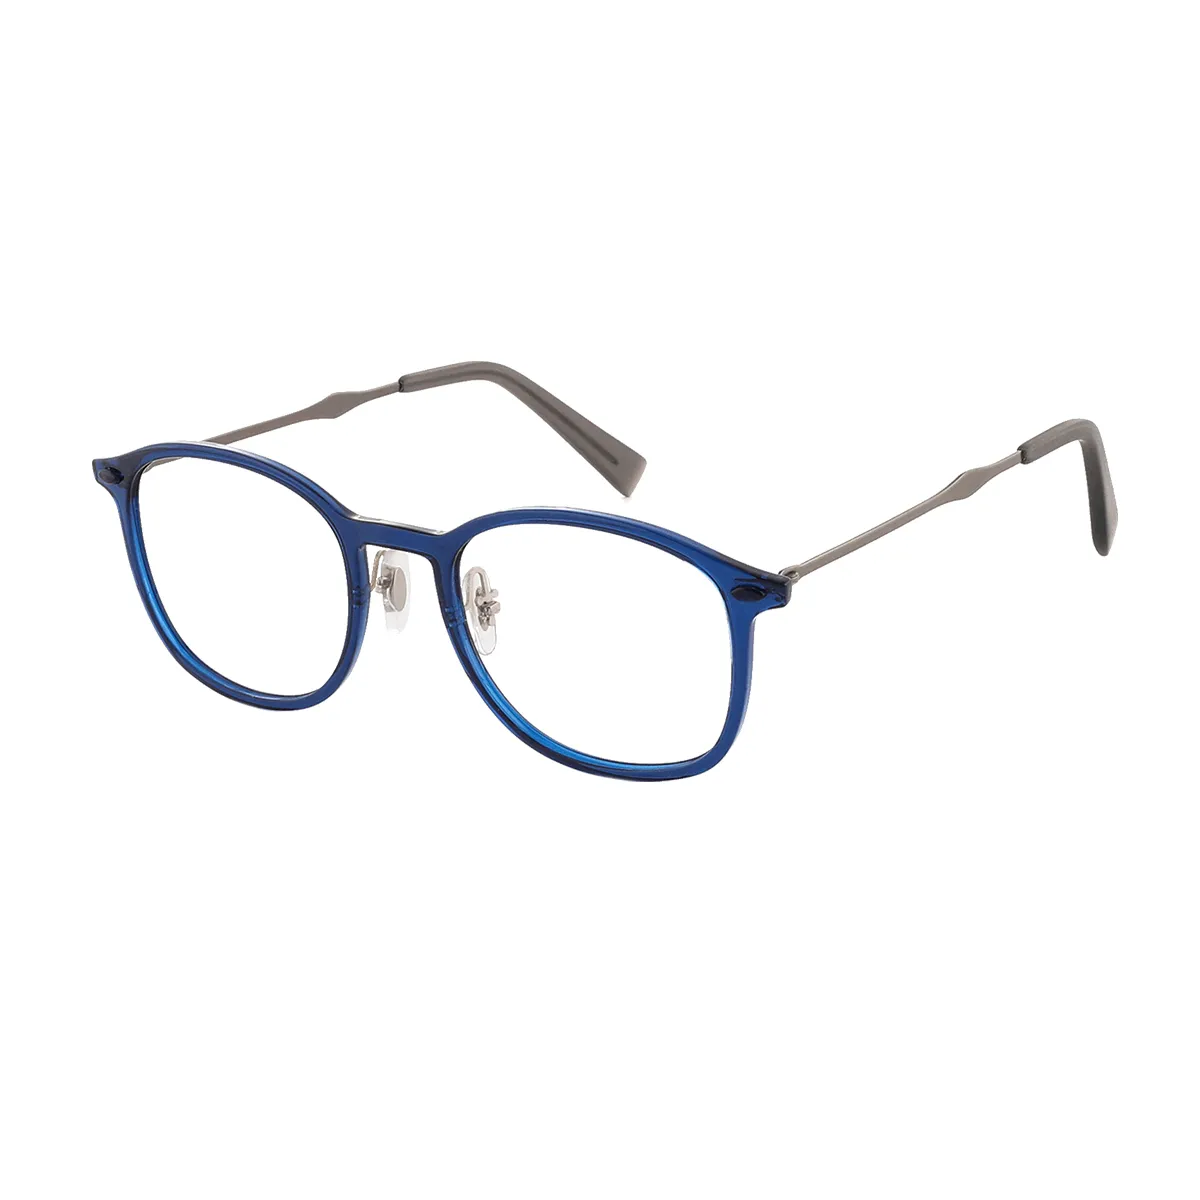 Roberts - Round Blue Glasses for Men & Women - EFE